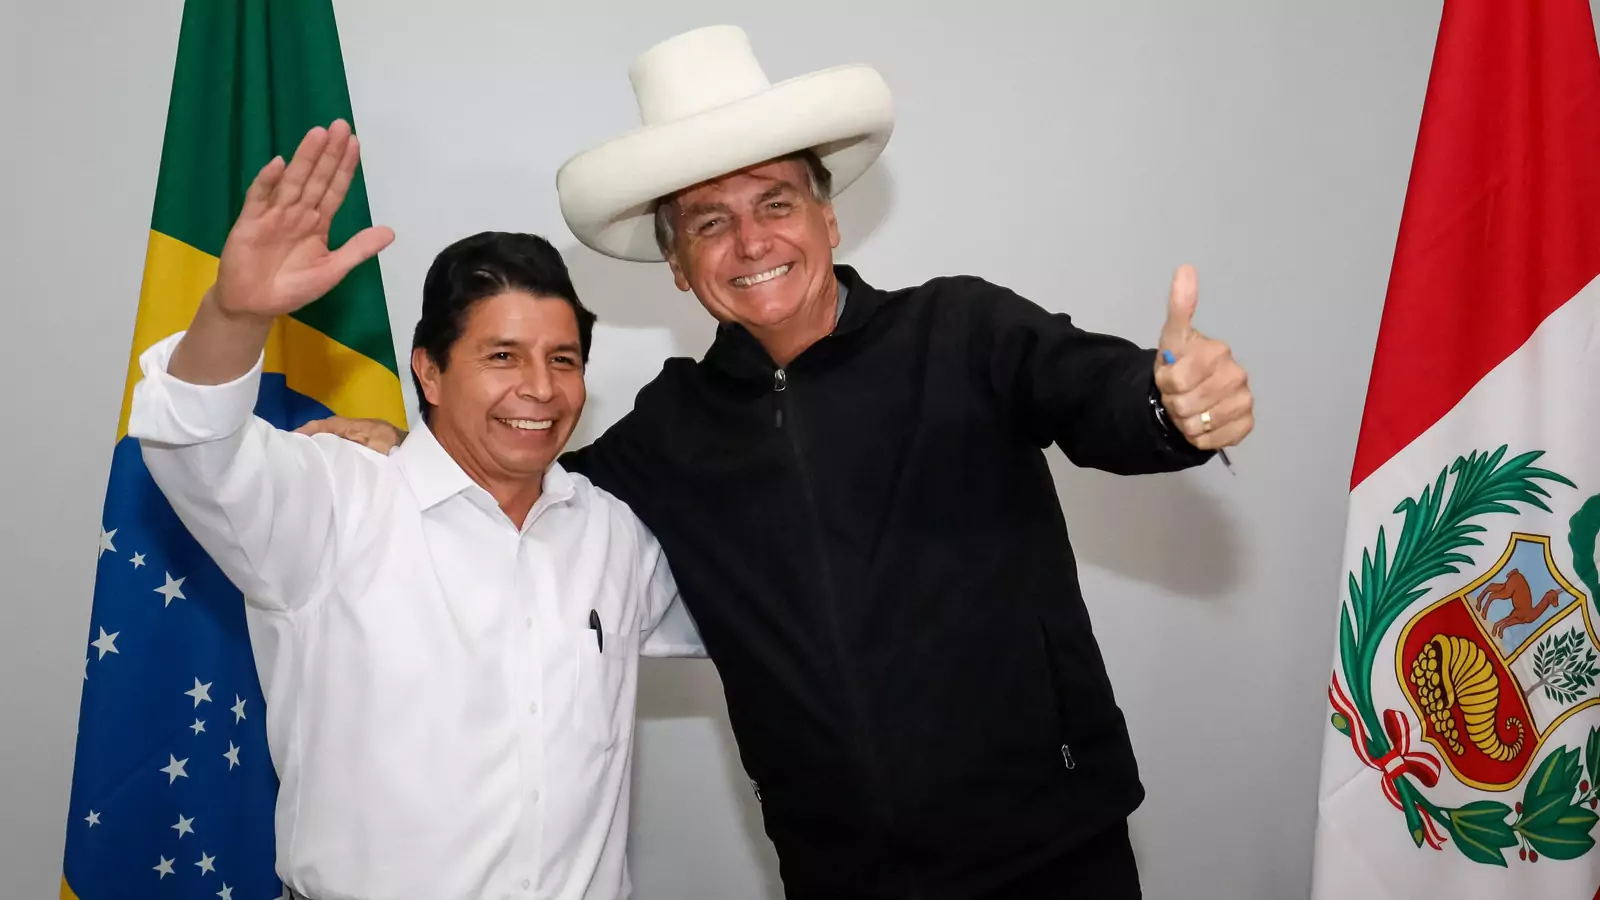 Peruvian President Pedro Castillo and his Brazilian counterpart, Jair Bolsonaro, both face serious doubts on their ability to govern